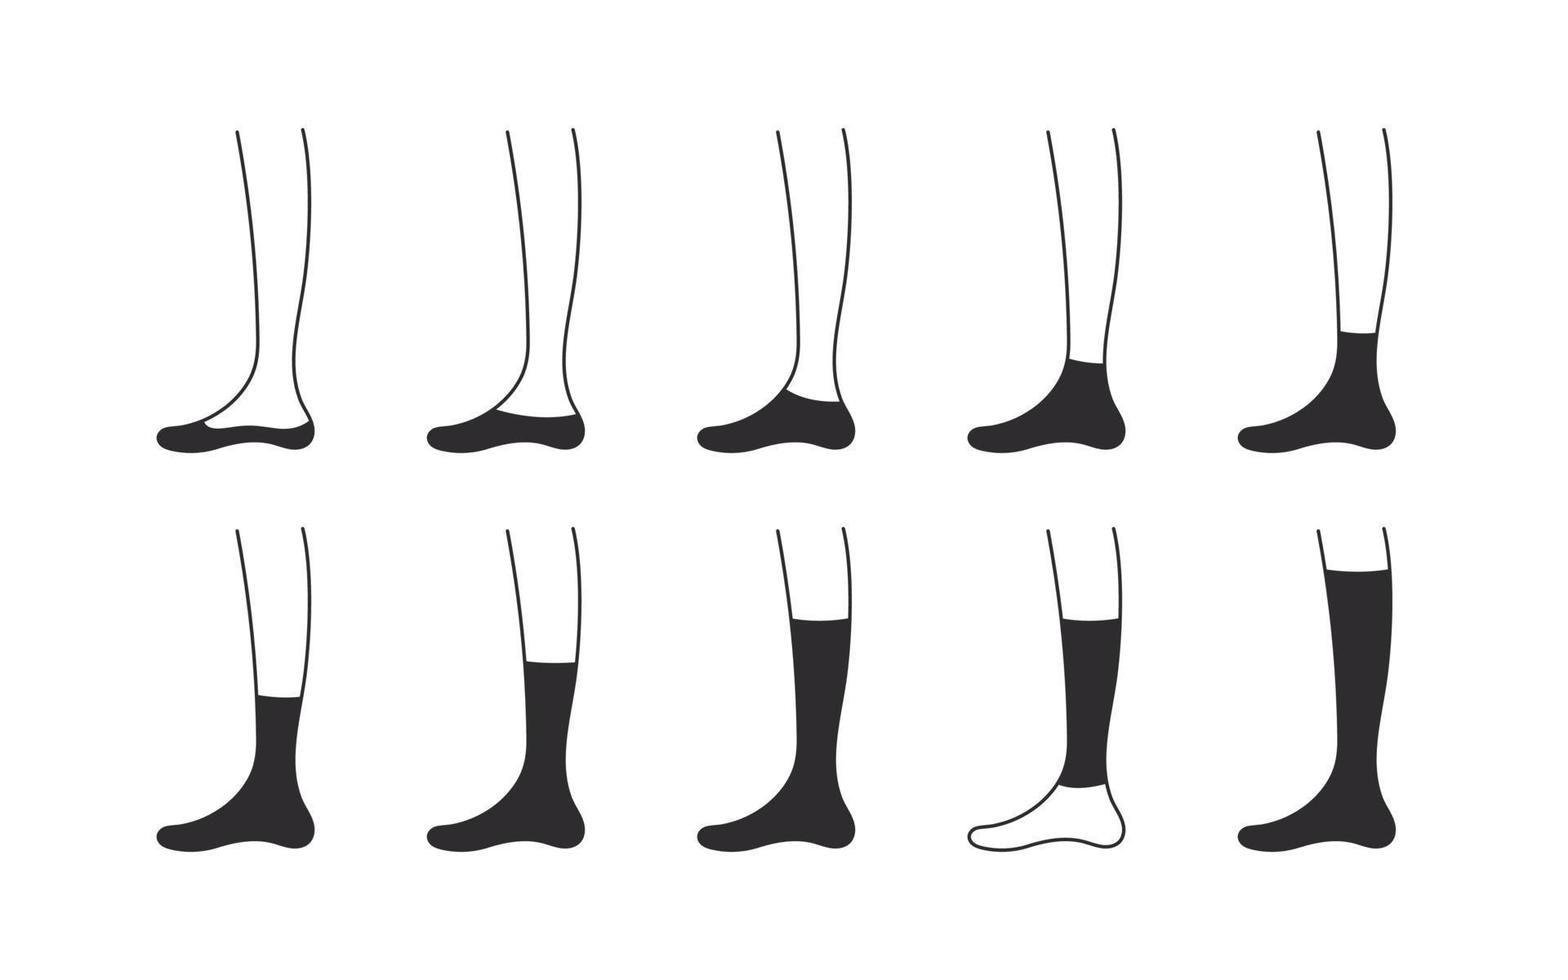 Types of socks icons. Black socks mockups. Set with various forms of socks. Garment icons. Vector illustration